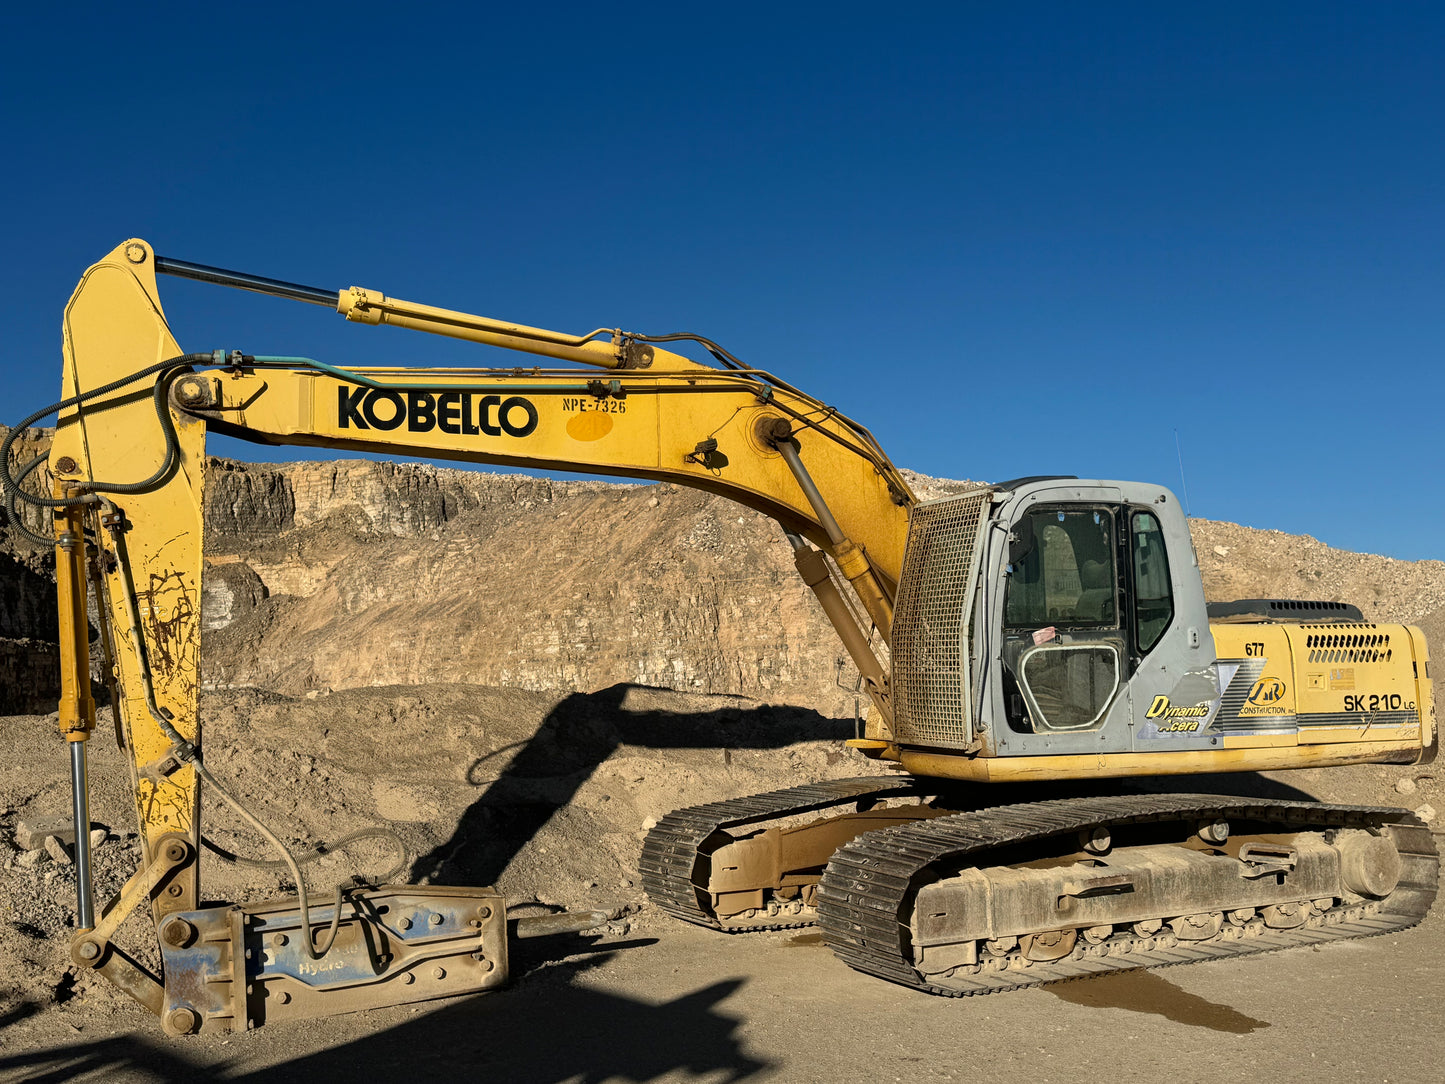 Heavy Construction Equipment from JAR Concrete & Paso Del Norte Materials